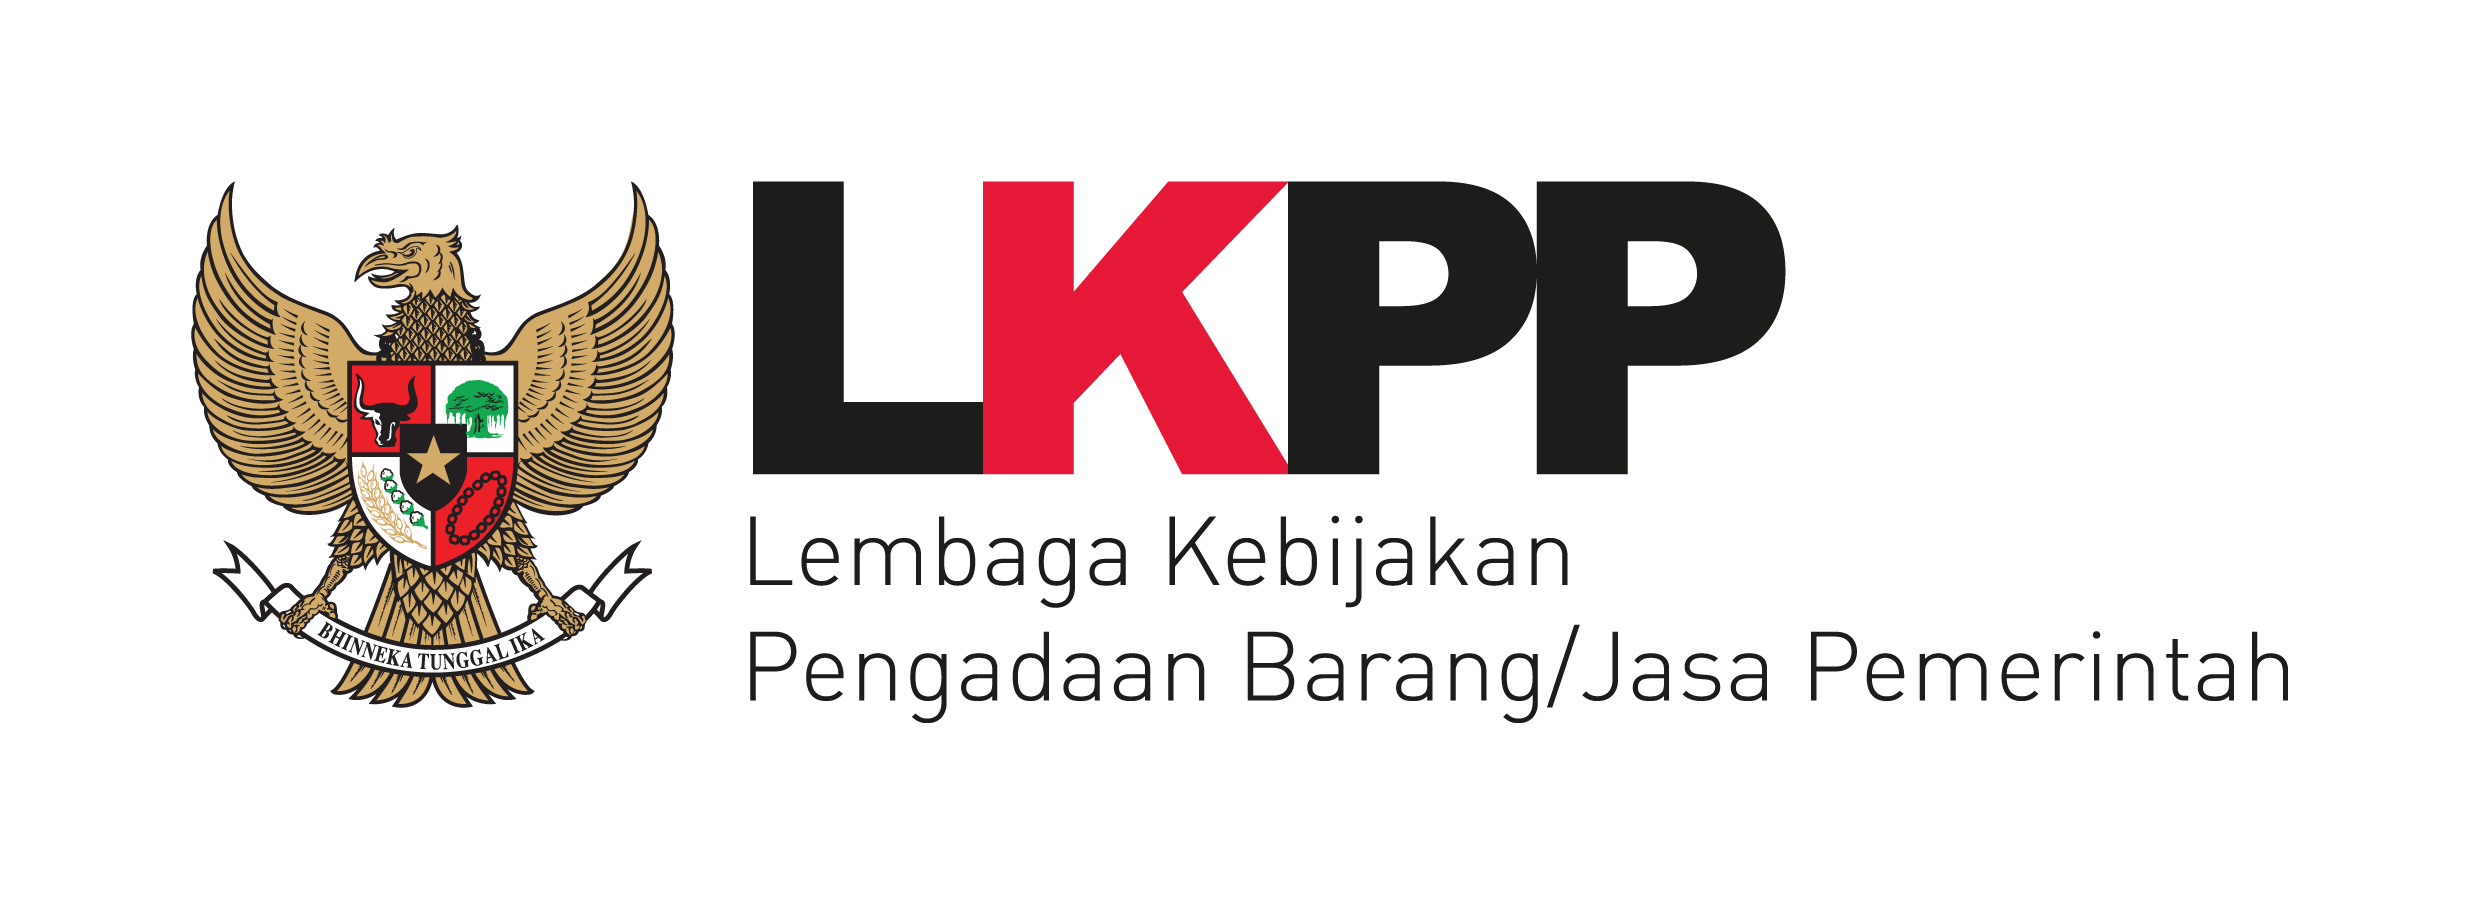 LKPP - Lembaga Kebijakan Pengadaan Barang/Jasa Pemerintah